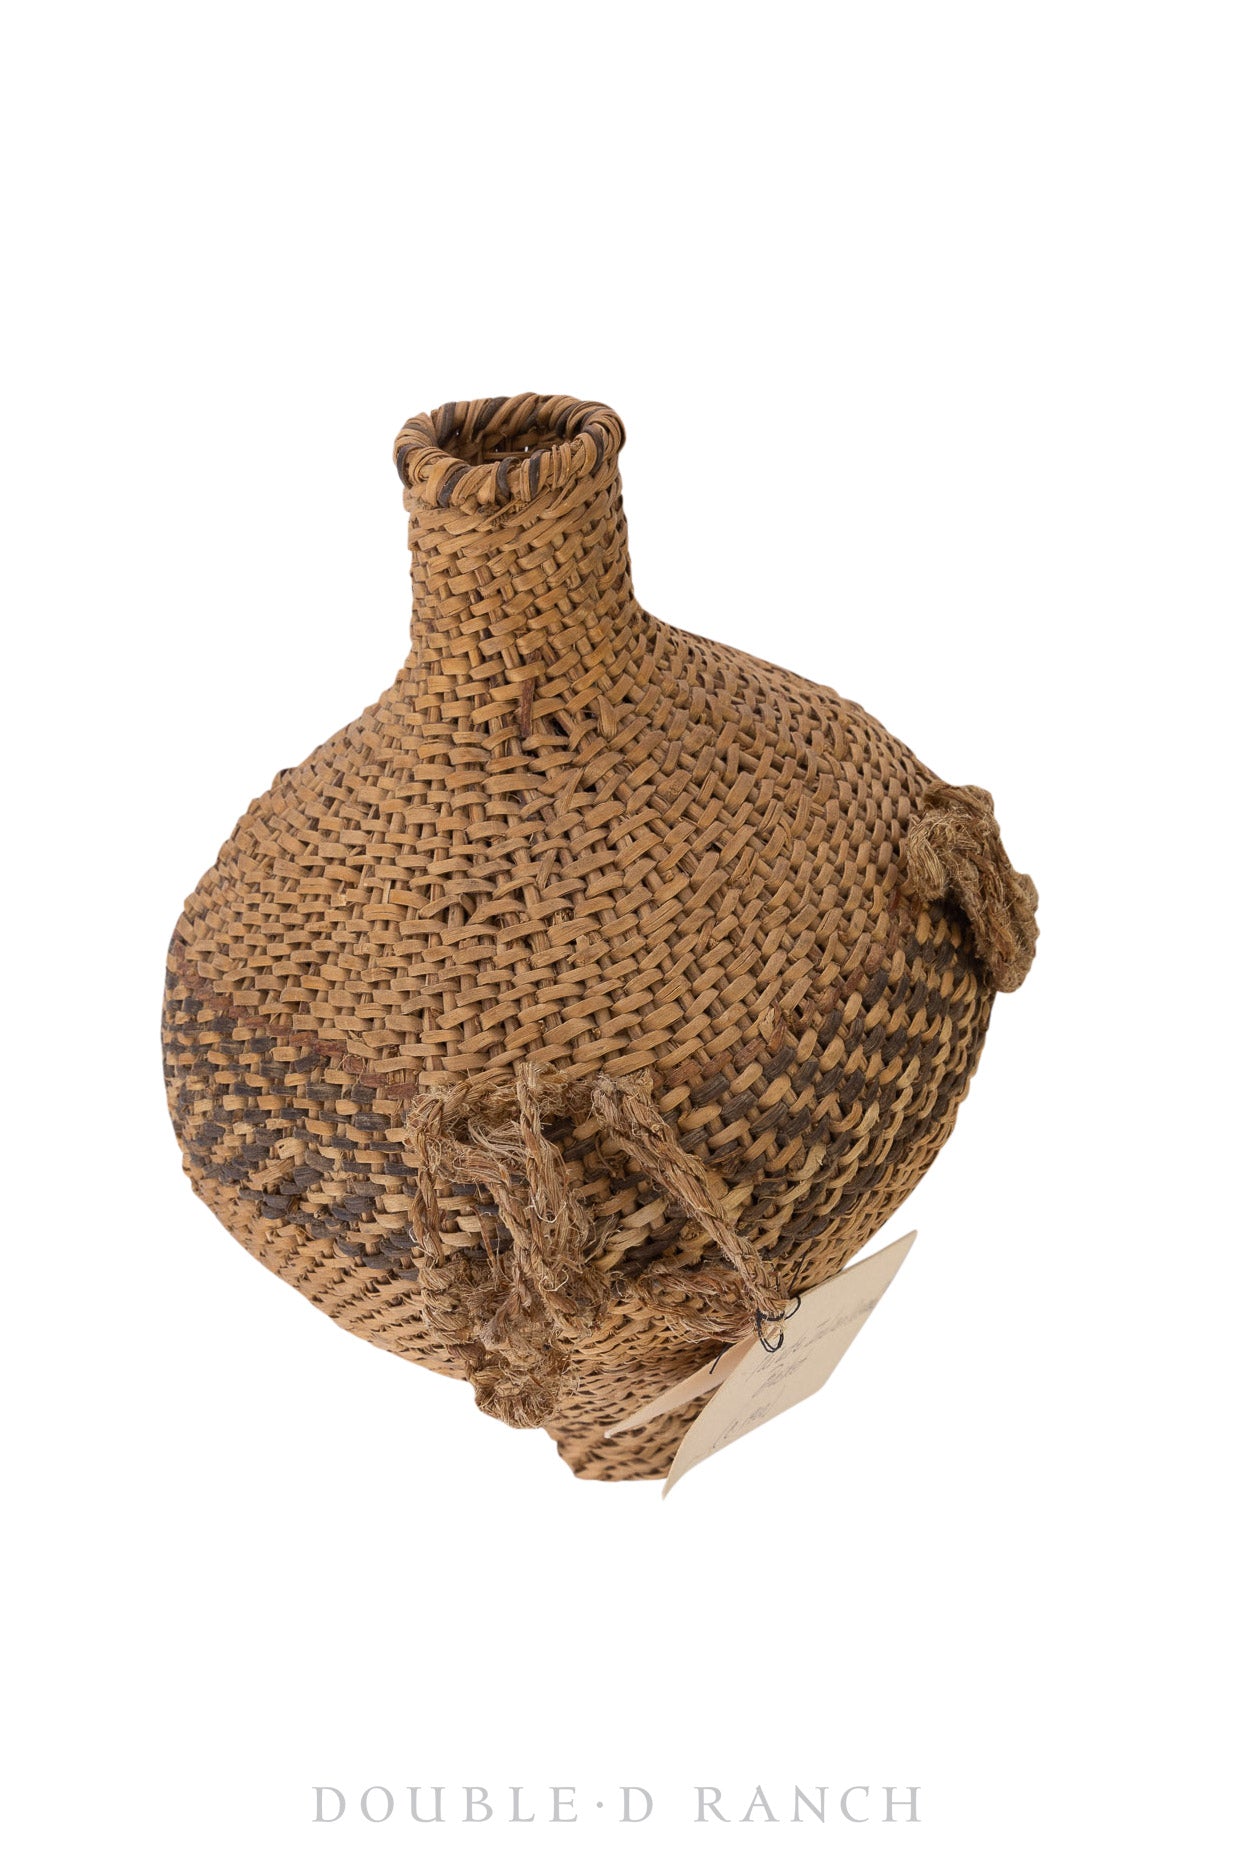 Miscellaneous, Basket, Seed, Paiute, Antique, 1900, 541